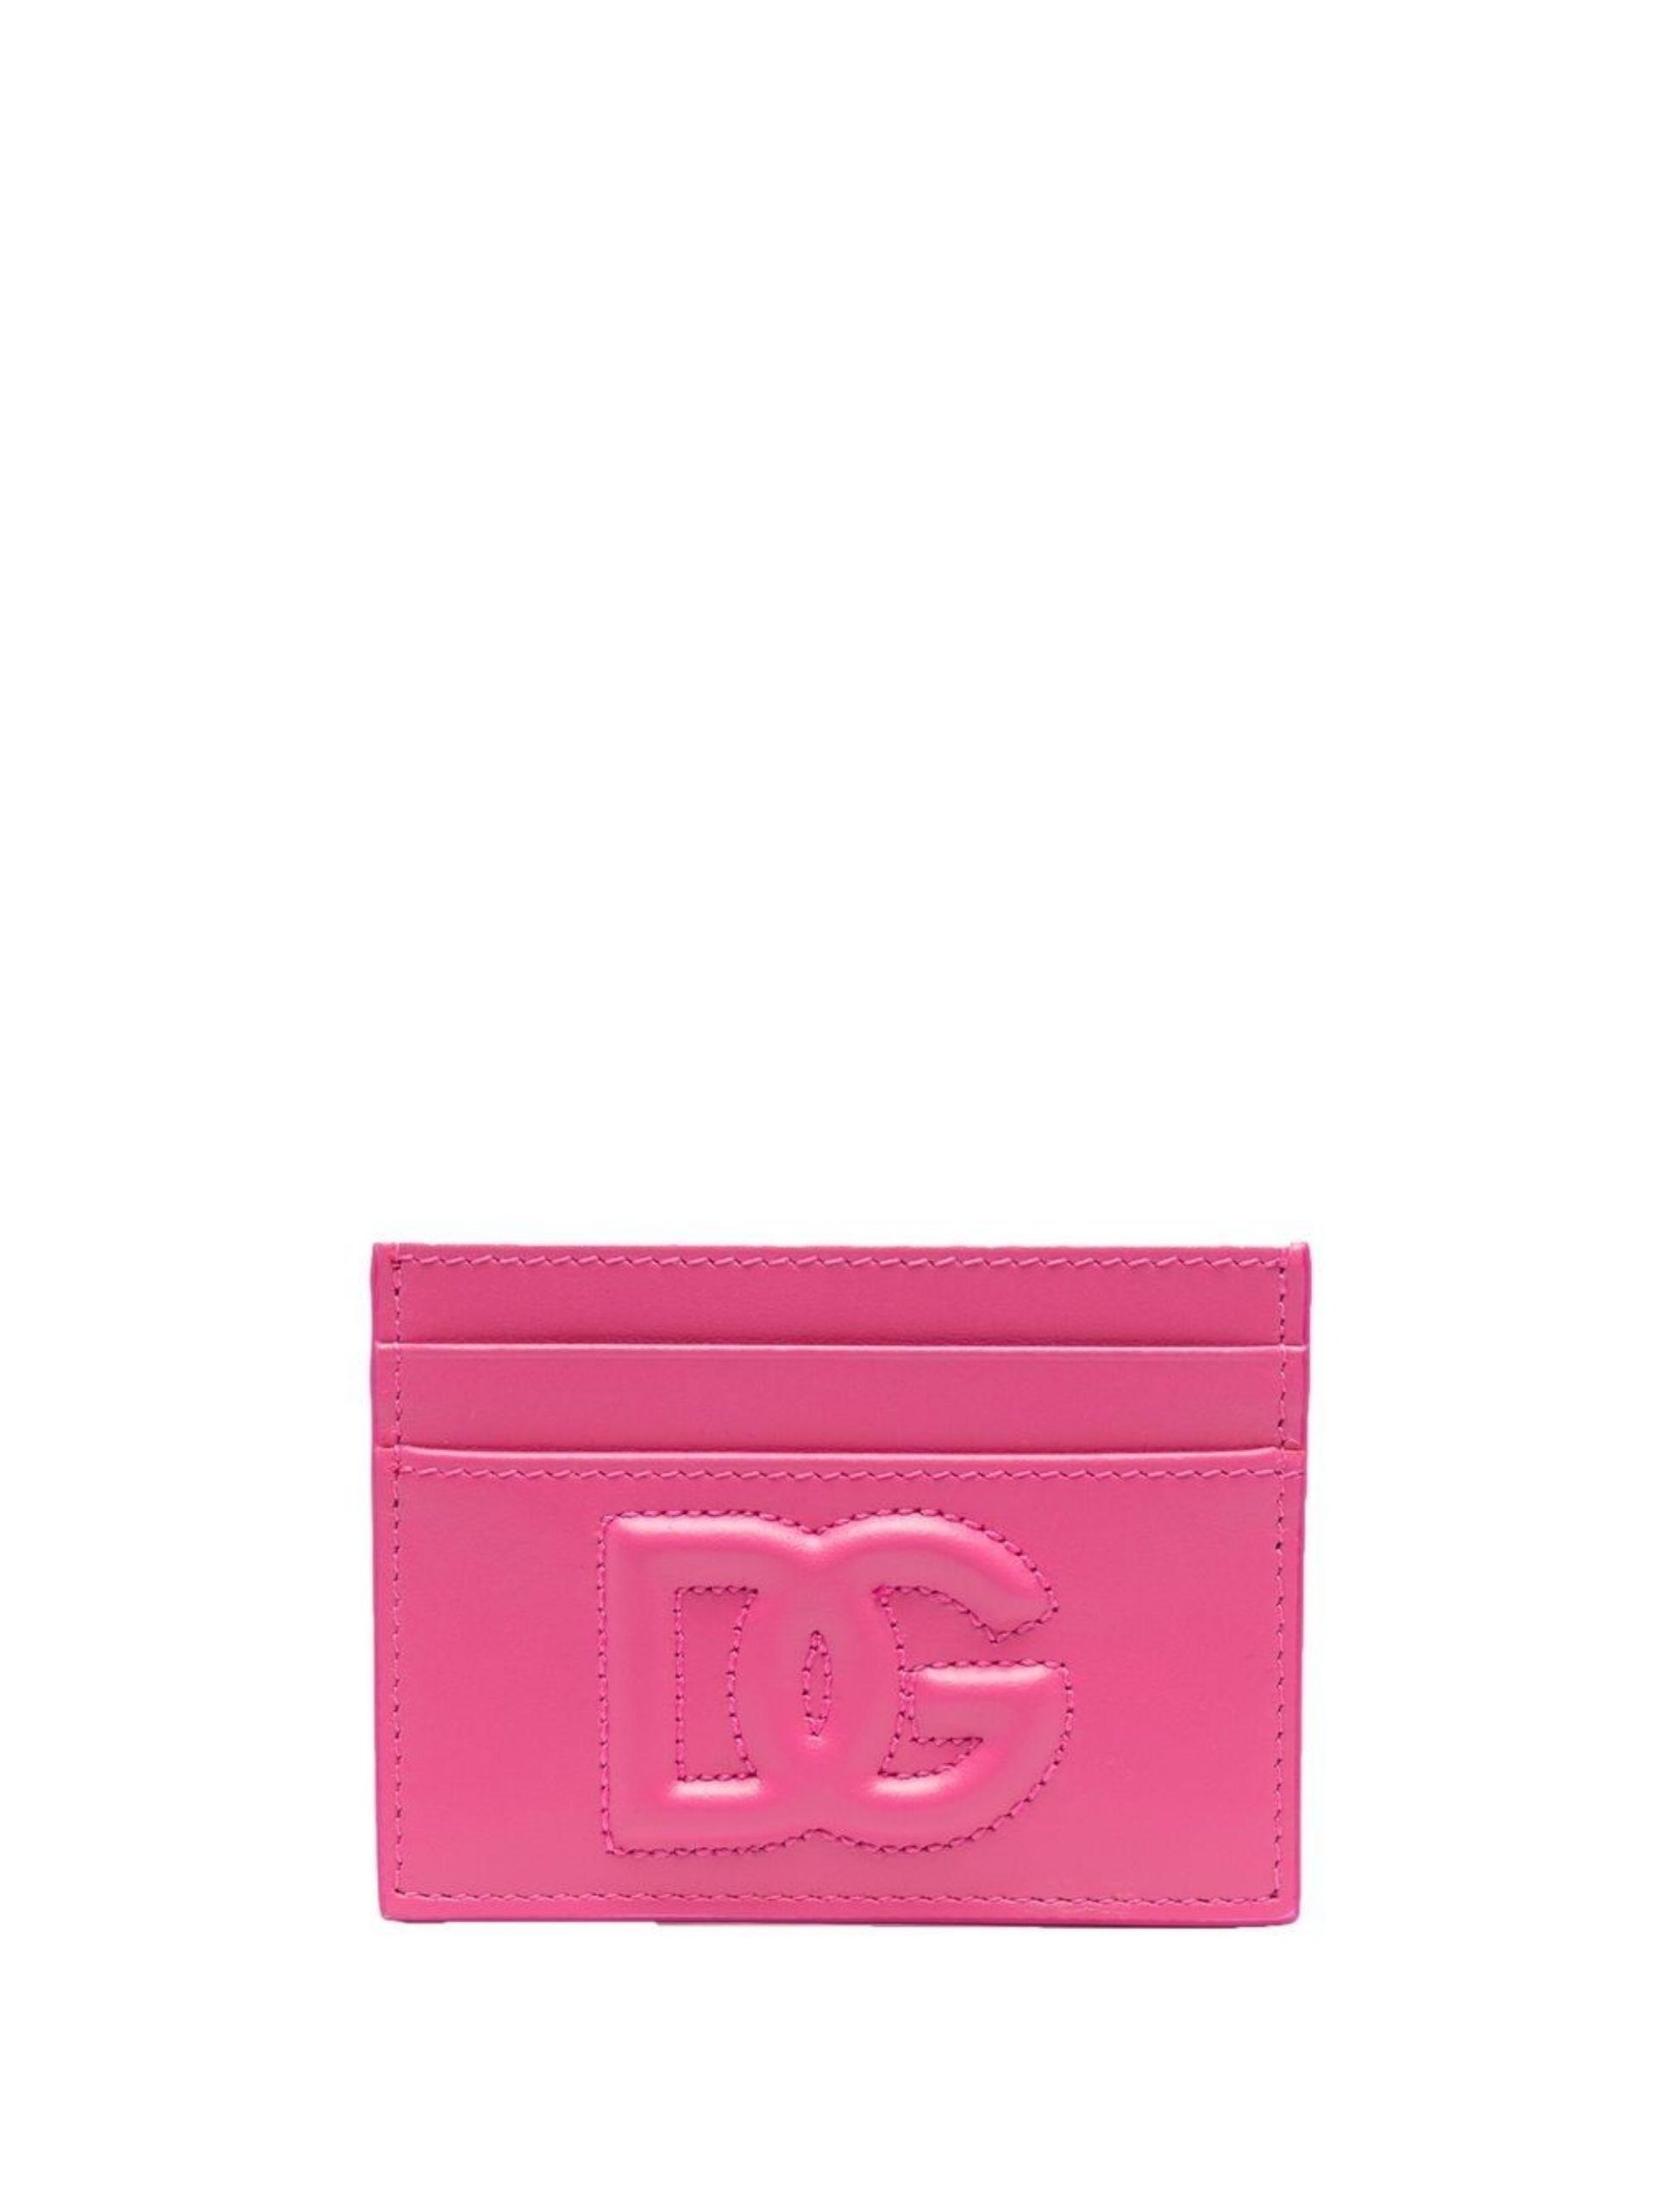 pink chanel card holder